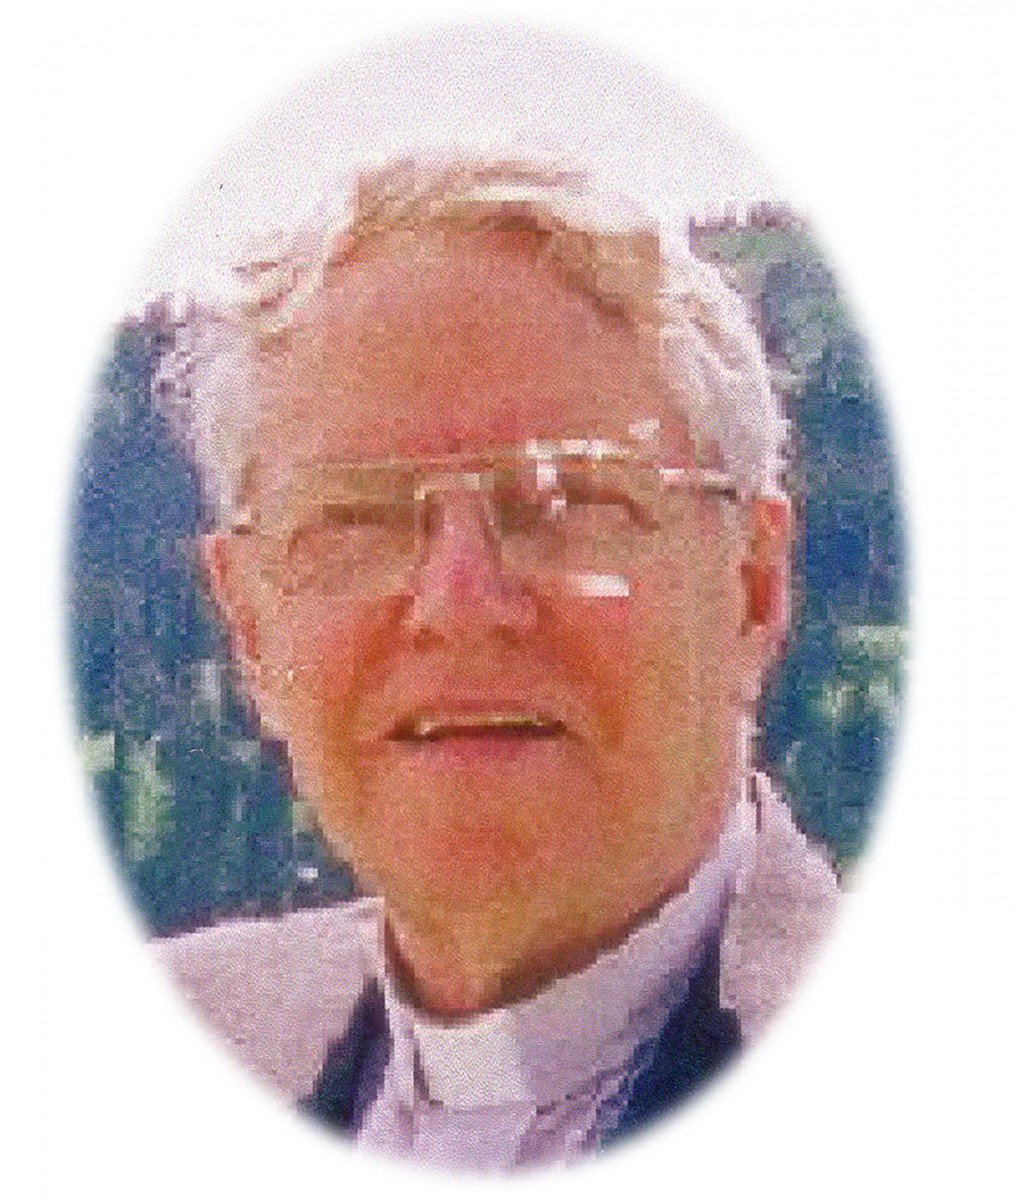 Buck, Rev. Maurice William